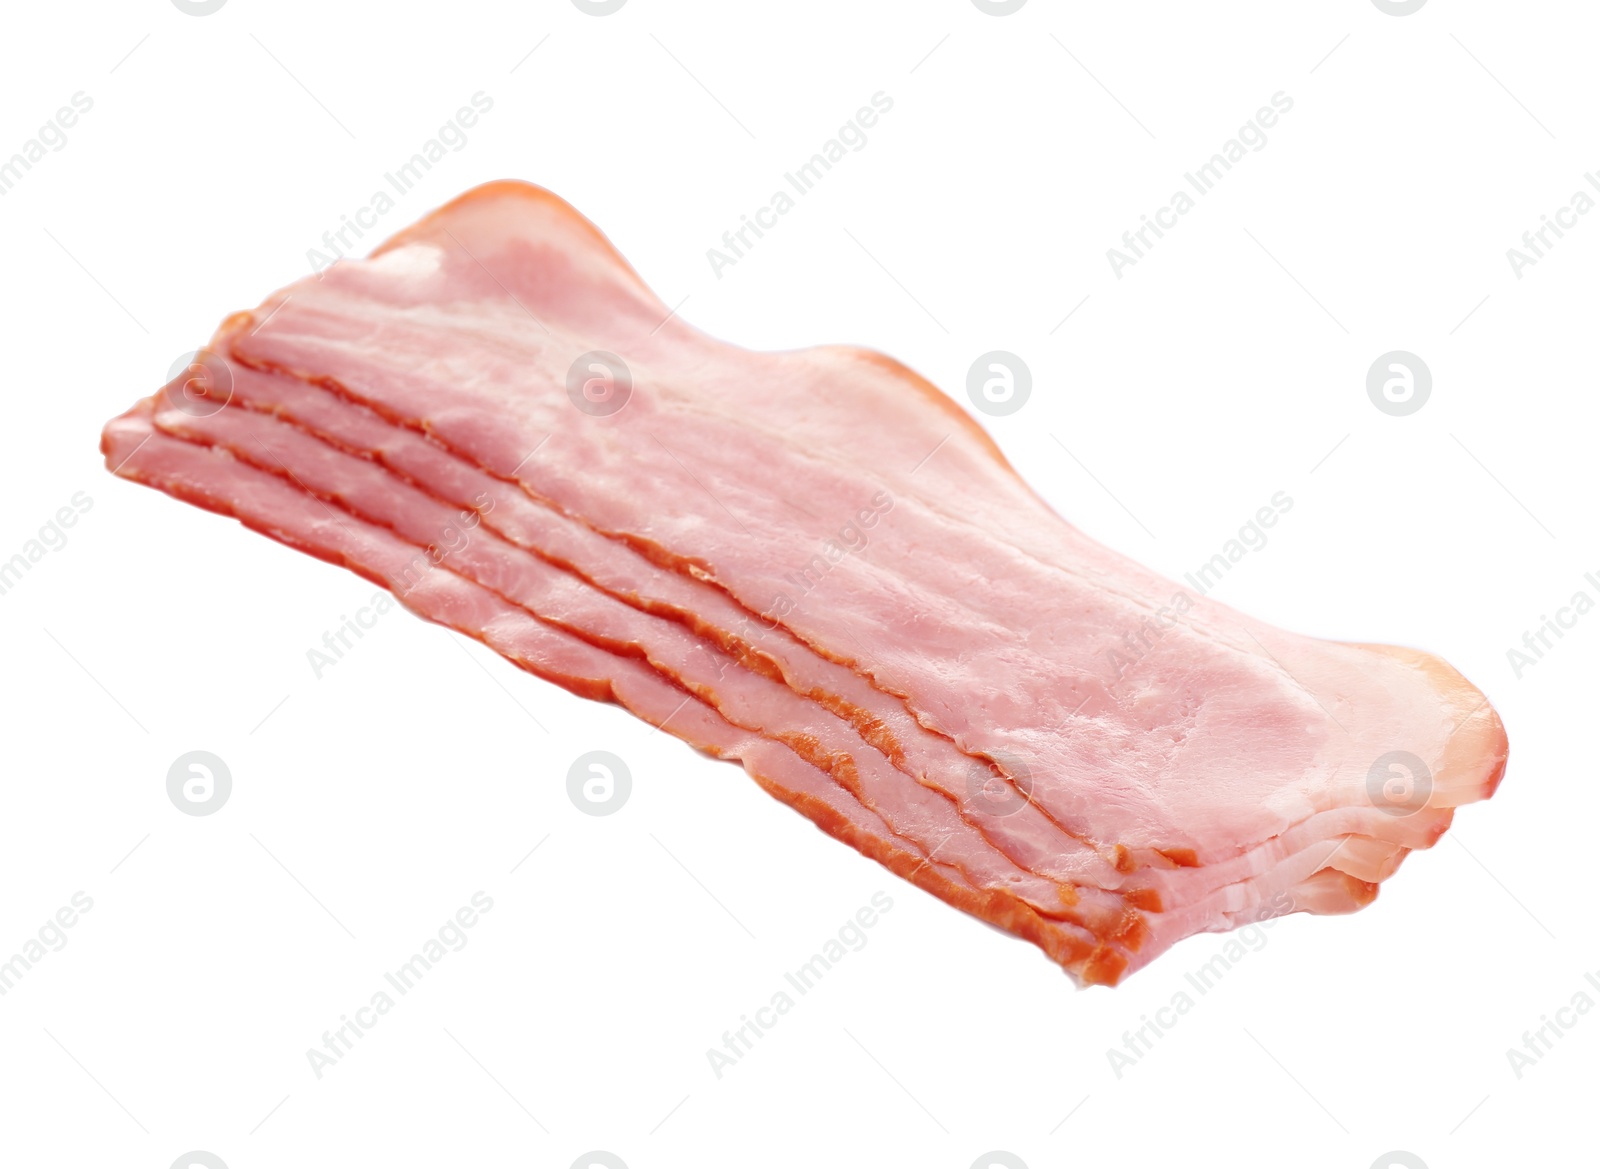 Image of Fresh raw bacon slices on white background